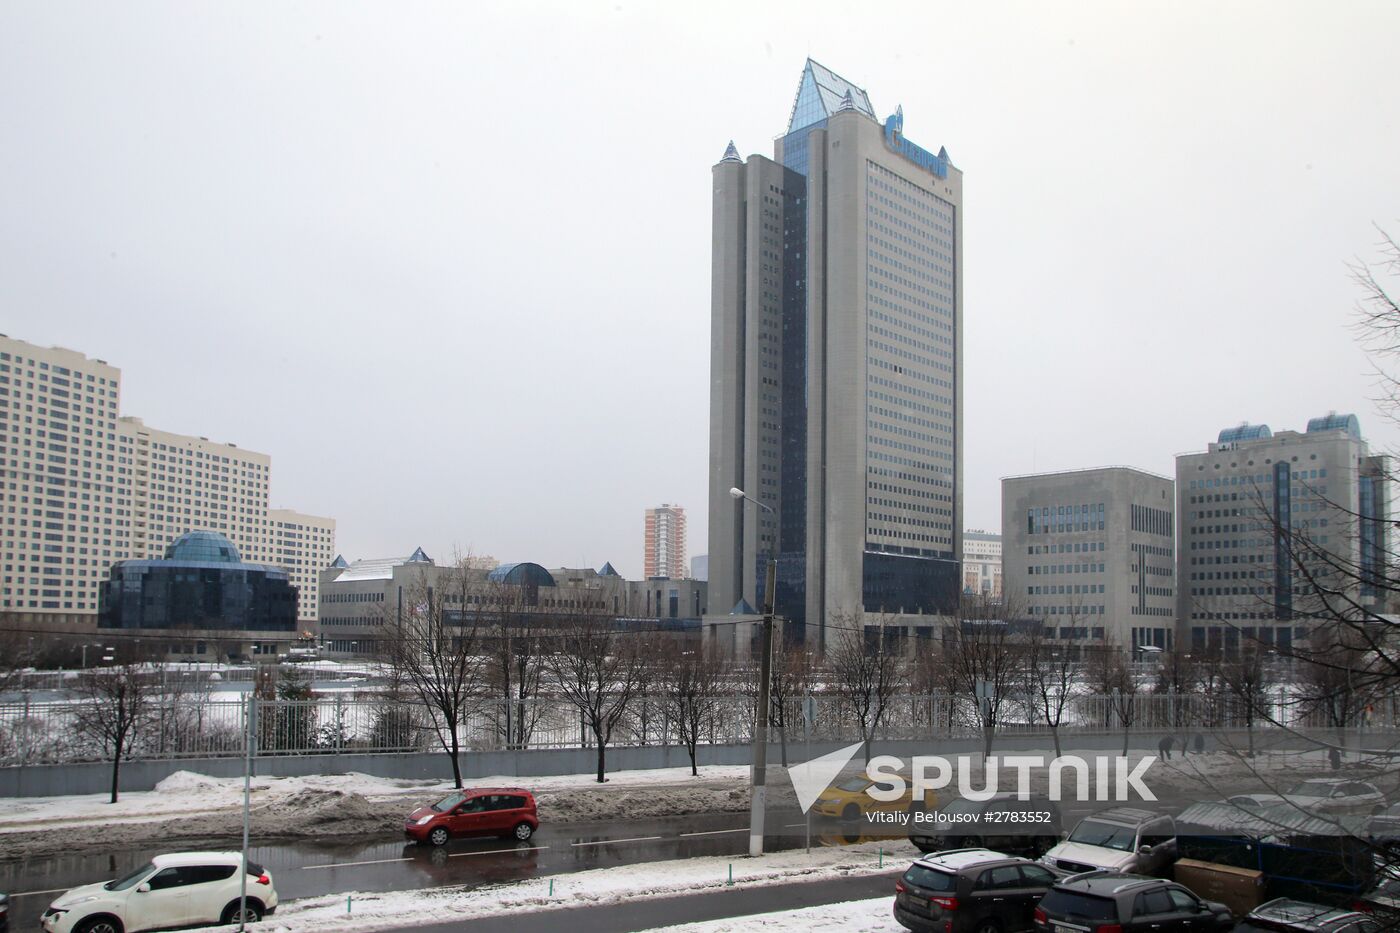 Gazprom office building